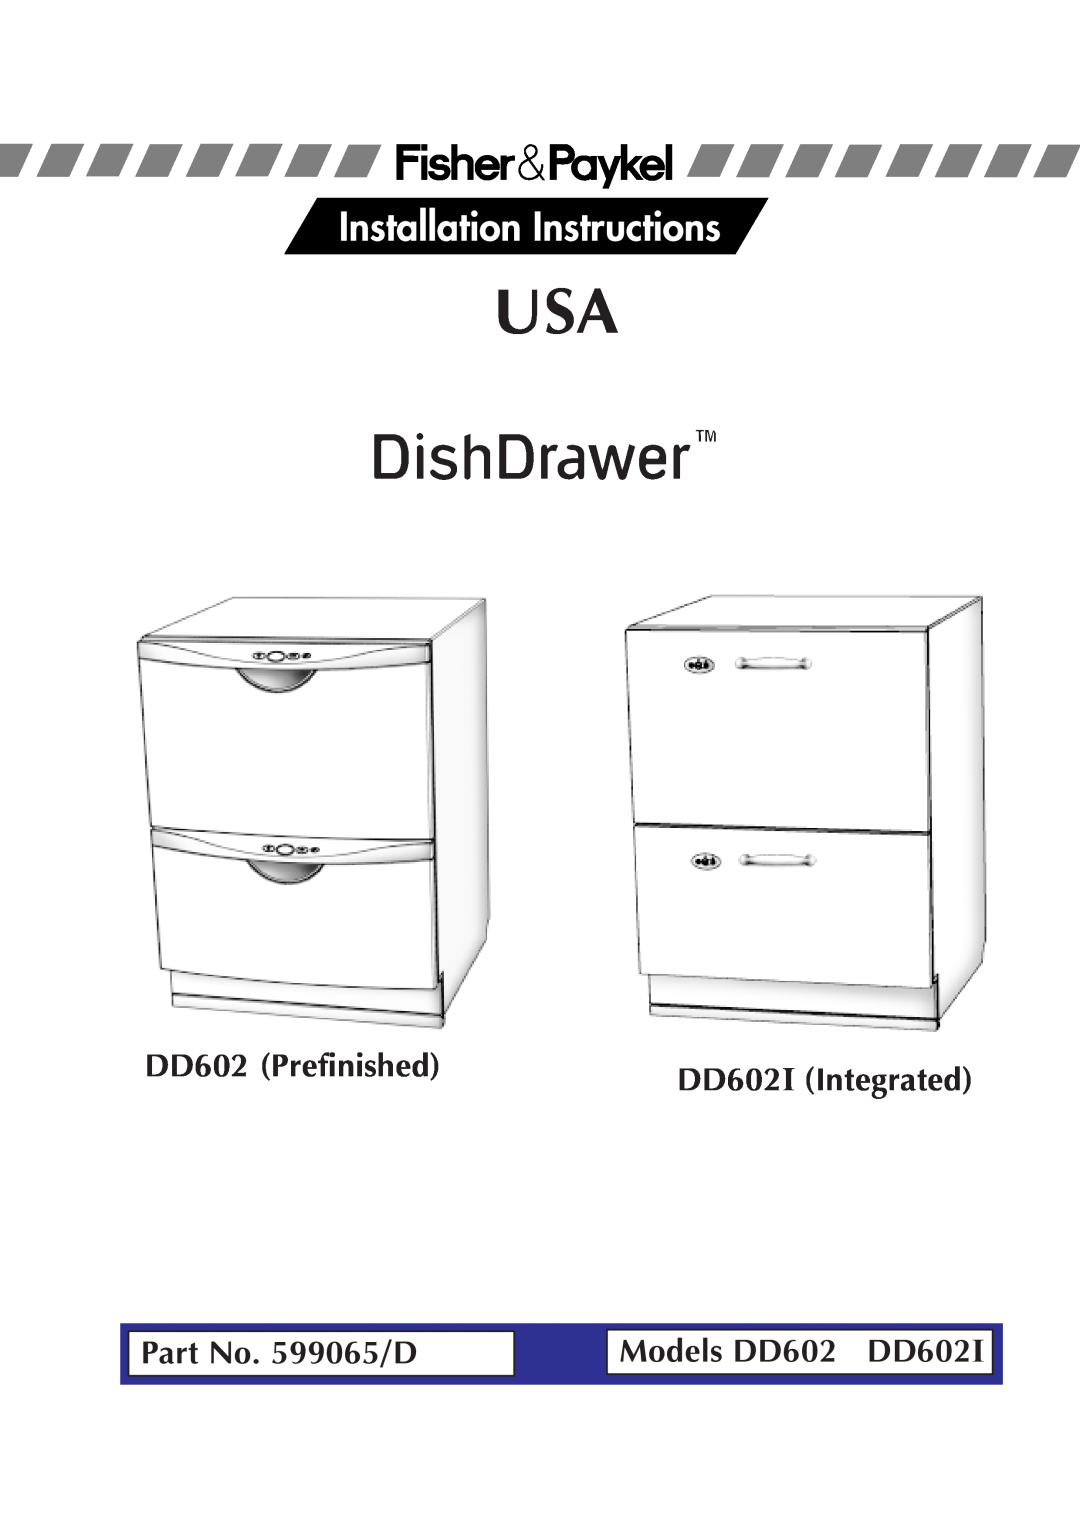 Fisher & Paykel manual DD602 Prefinished, Part No. 599065/D, Models DD602 DD602I, DD602I Integrated 